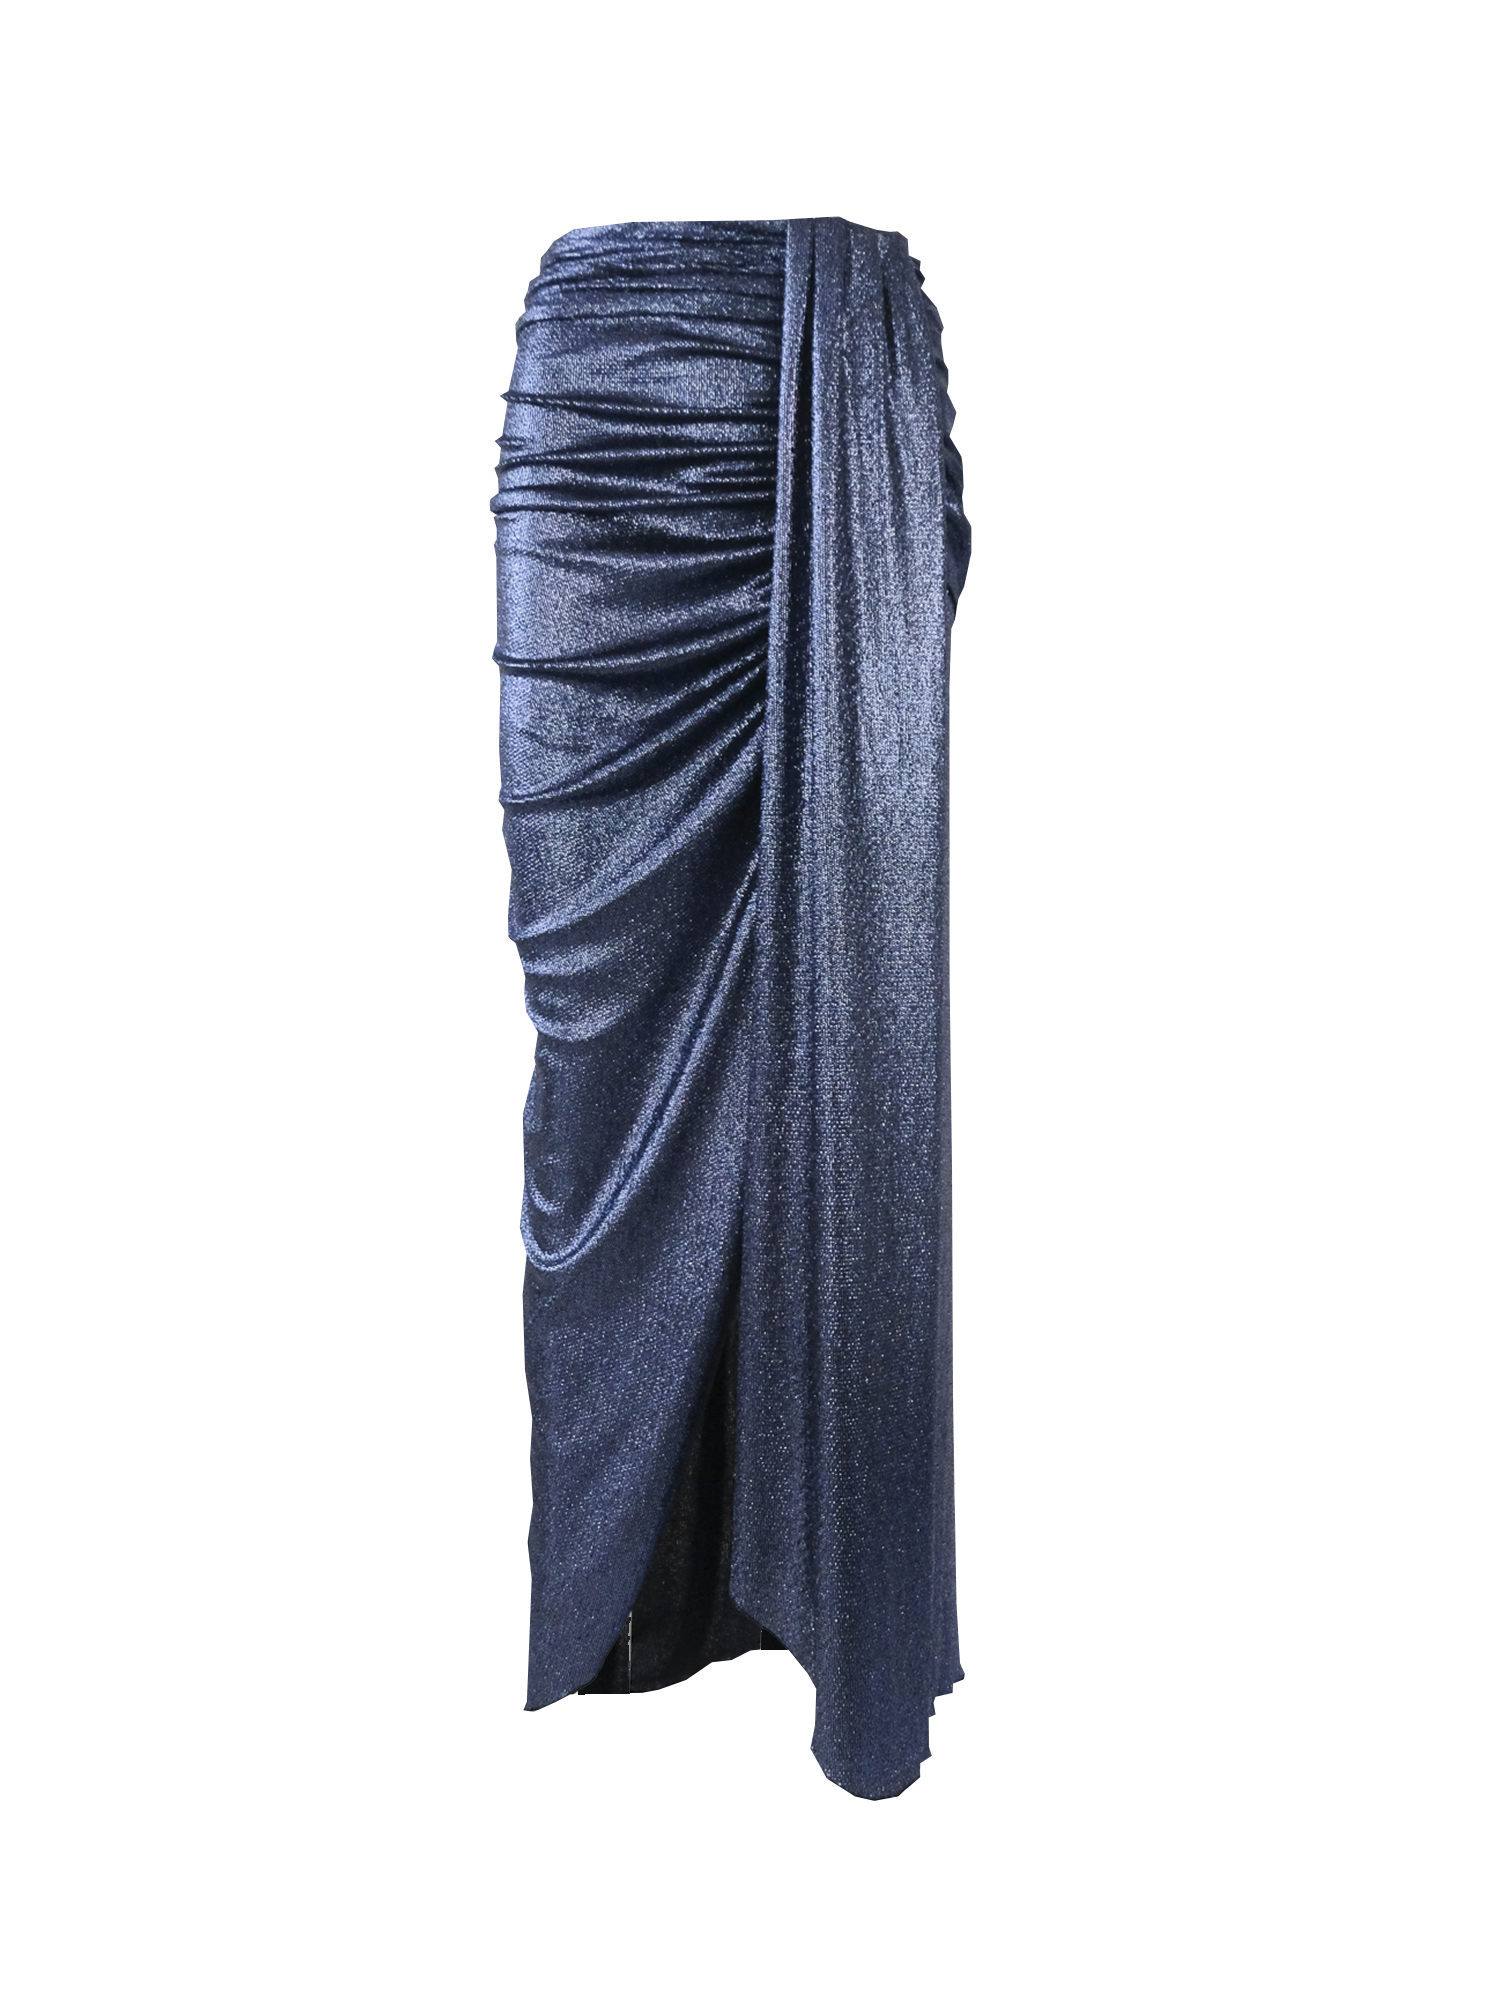 AMANDA - long blue lurex skirt with a slit